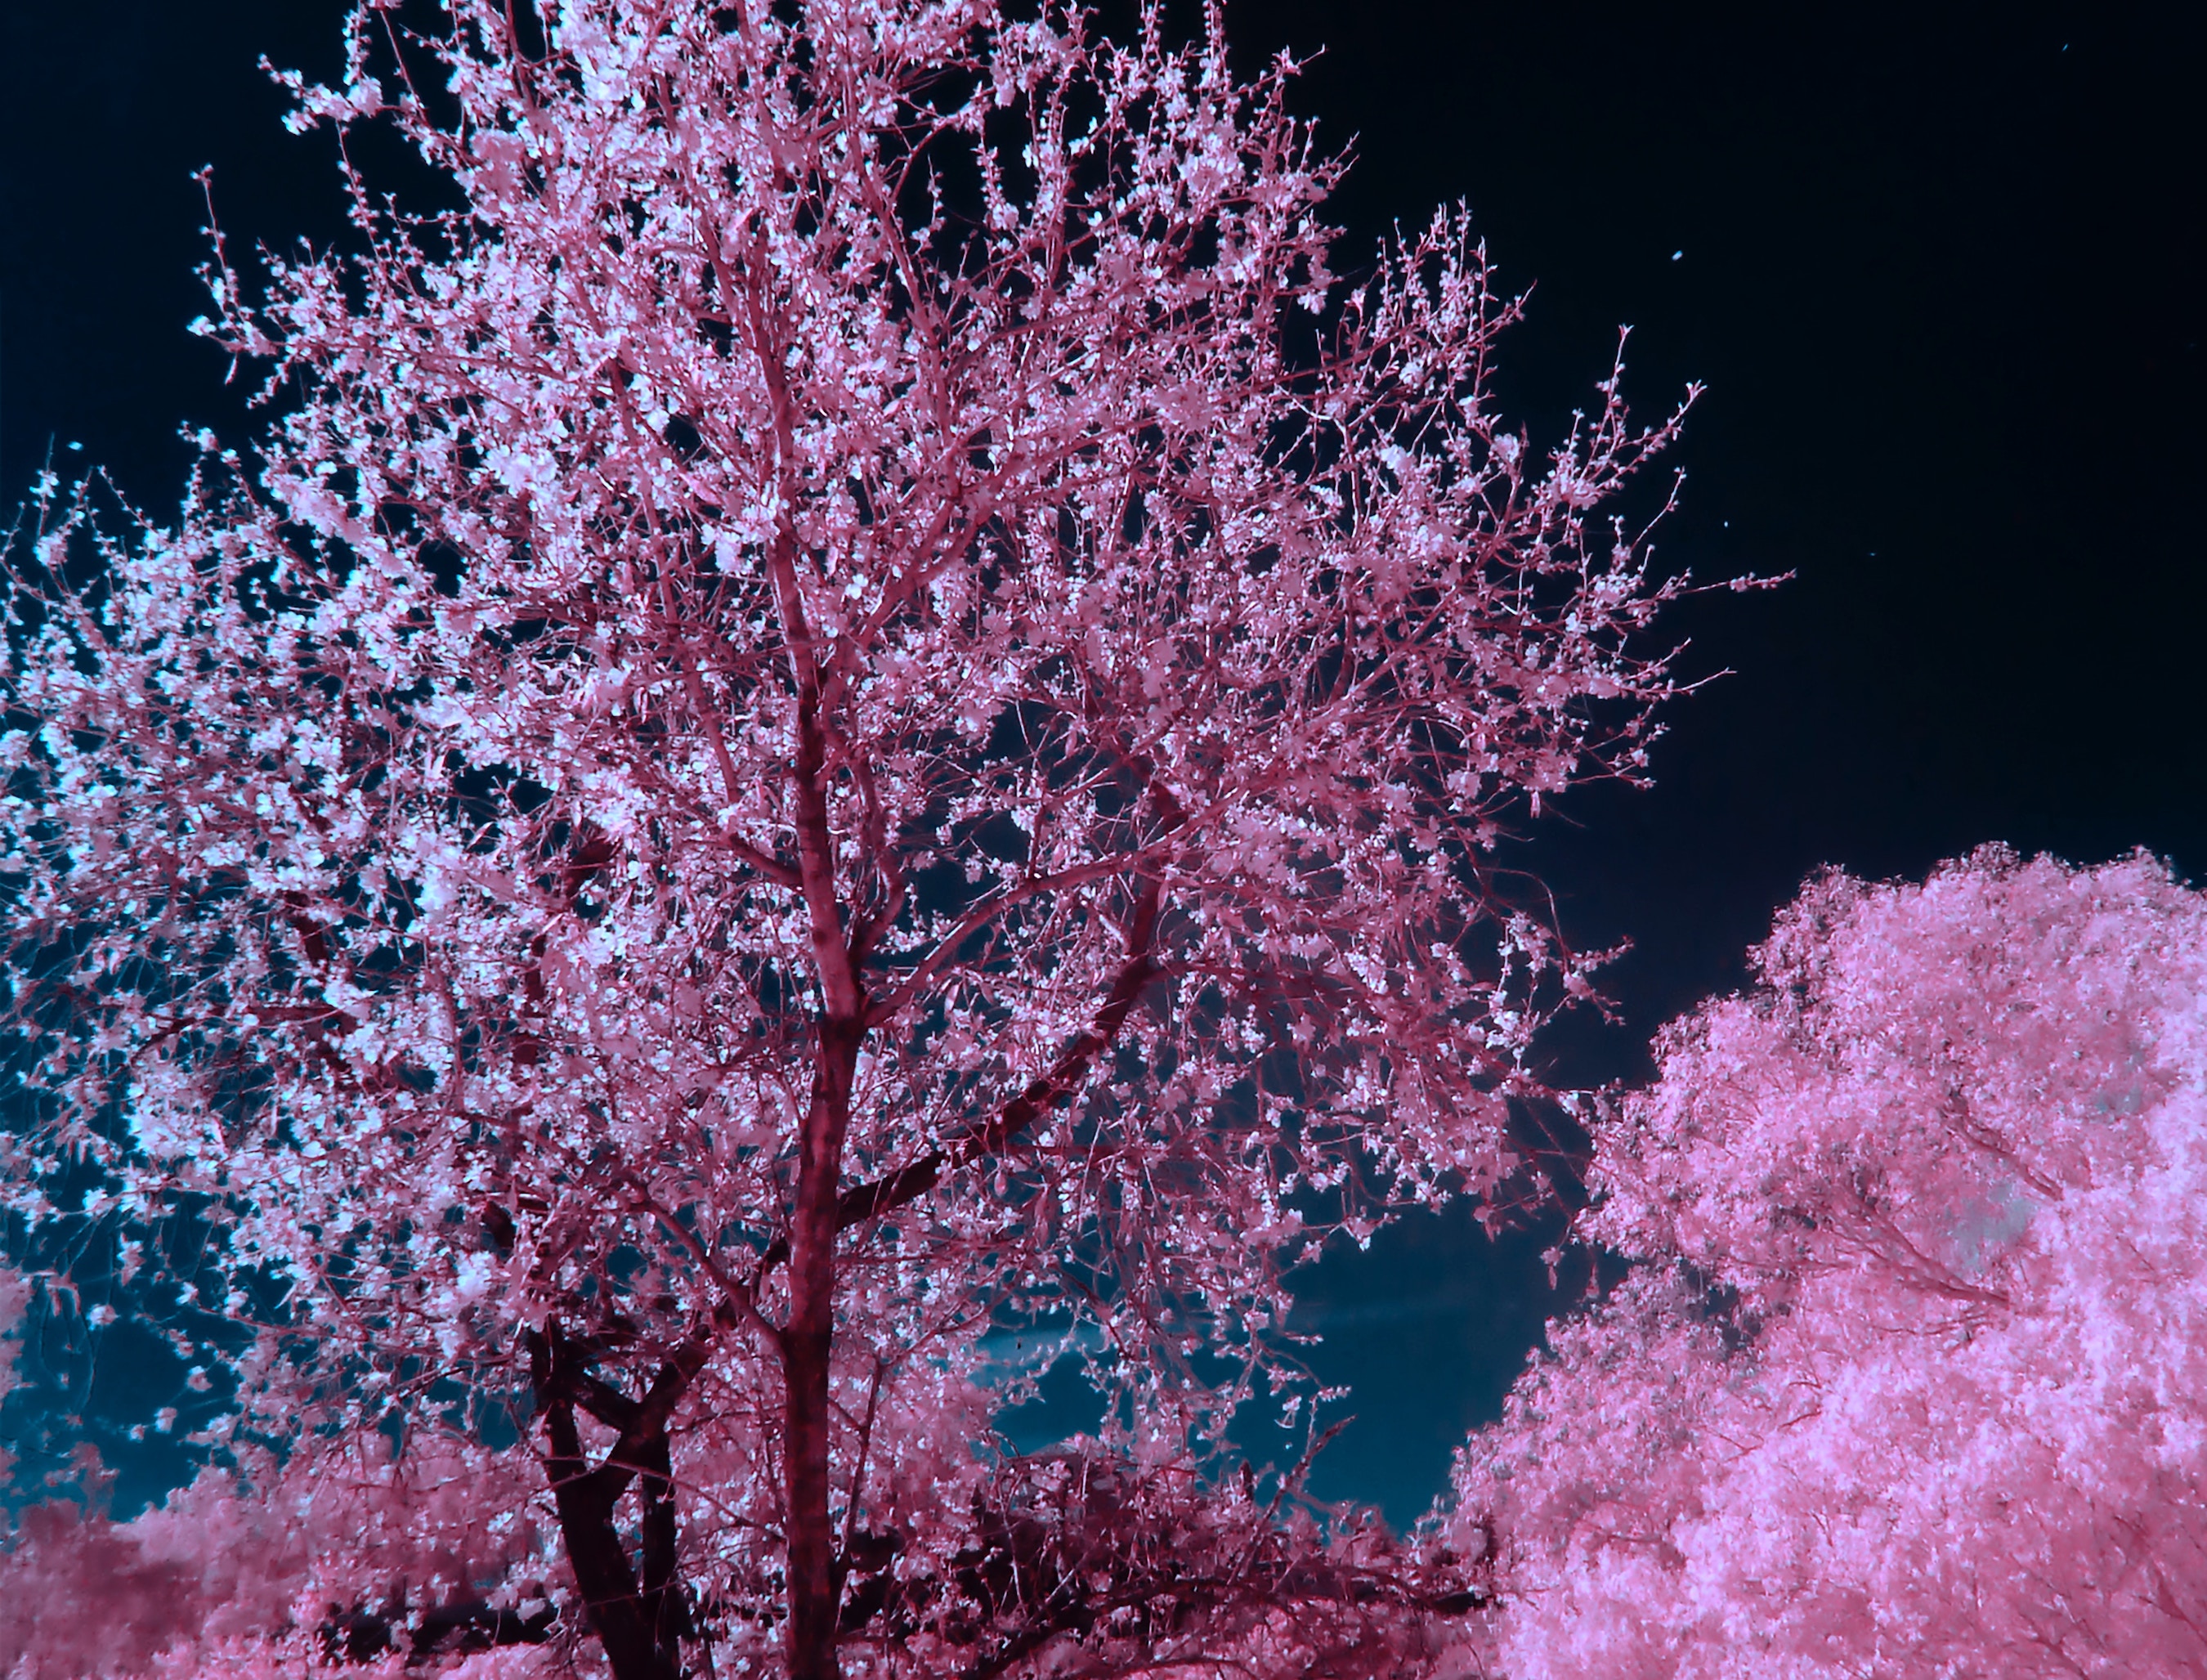 Tree in the nighttime